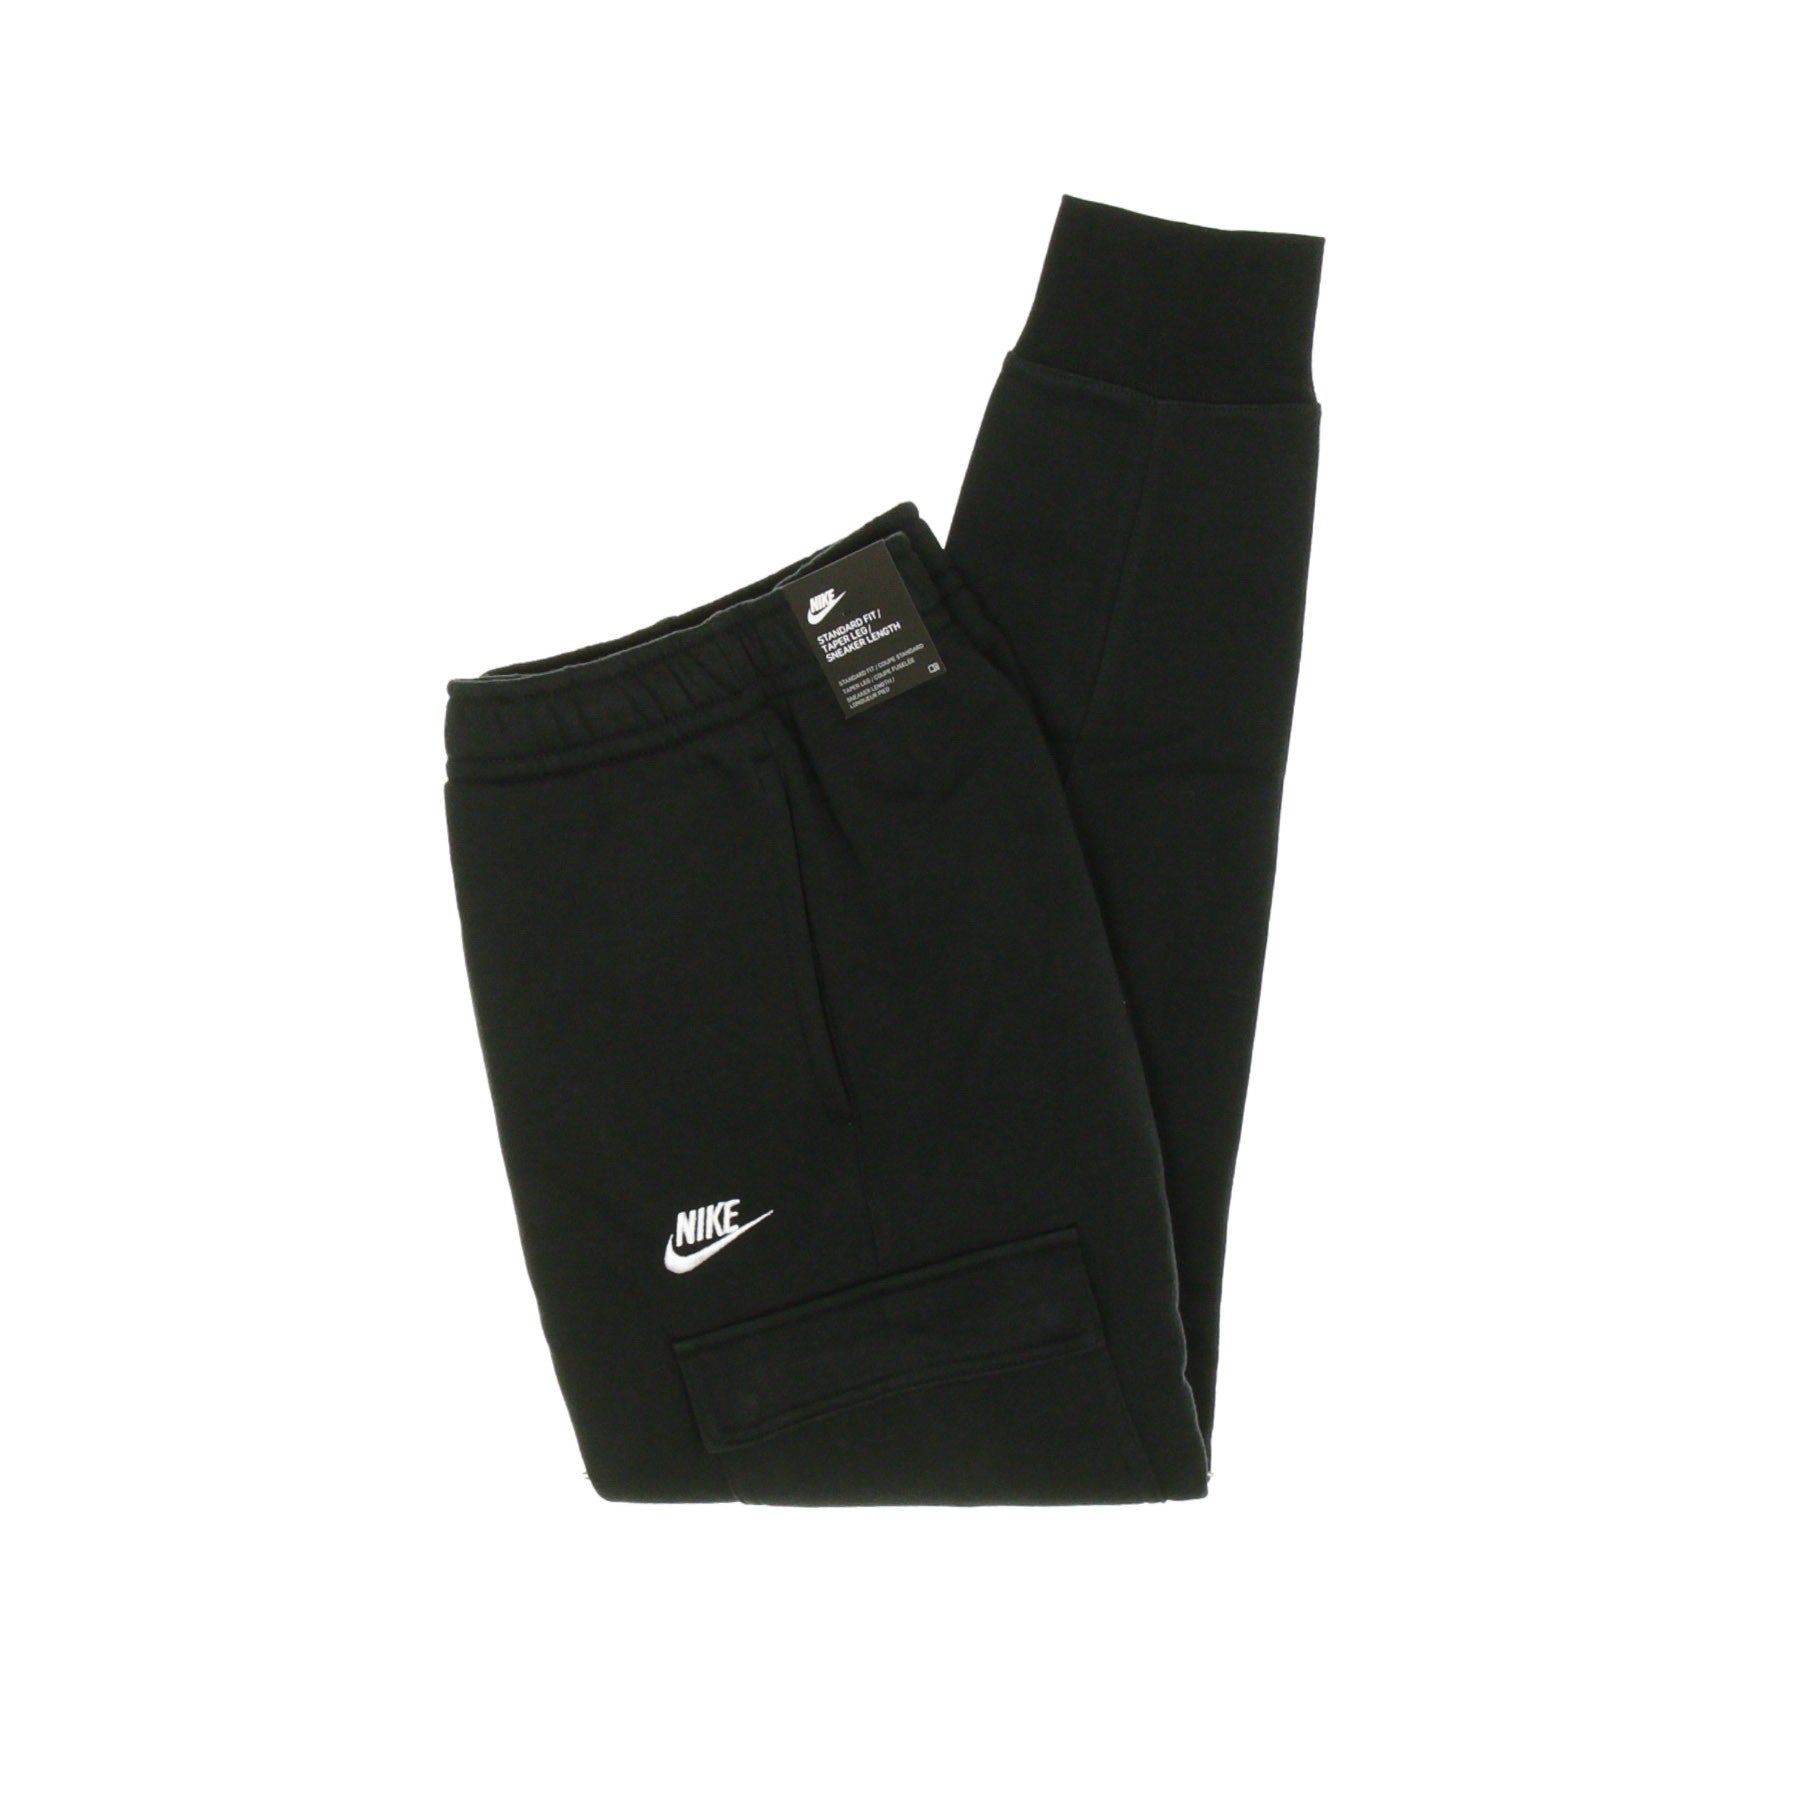 Nike, Pantalone Tuta Felpato Uomo Sportswear Club Cargo, Black/black/white